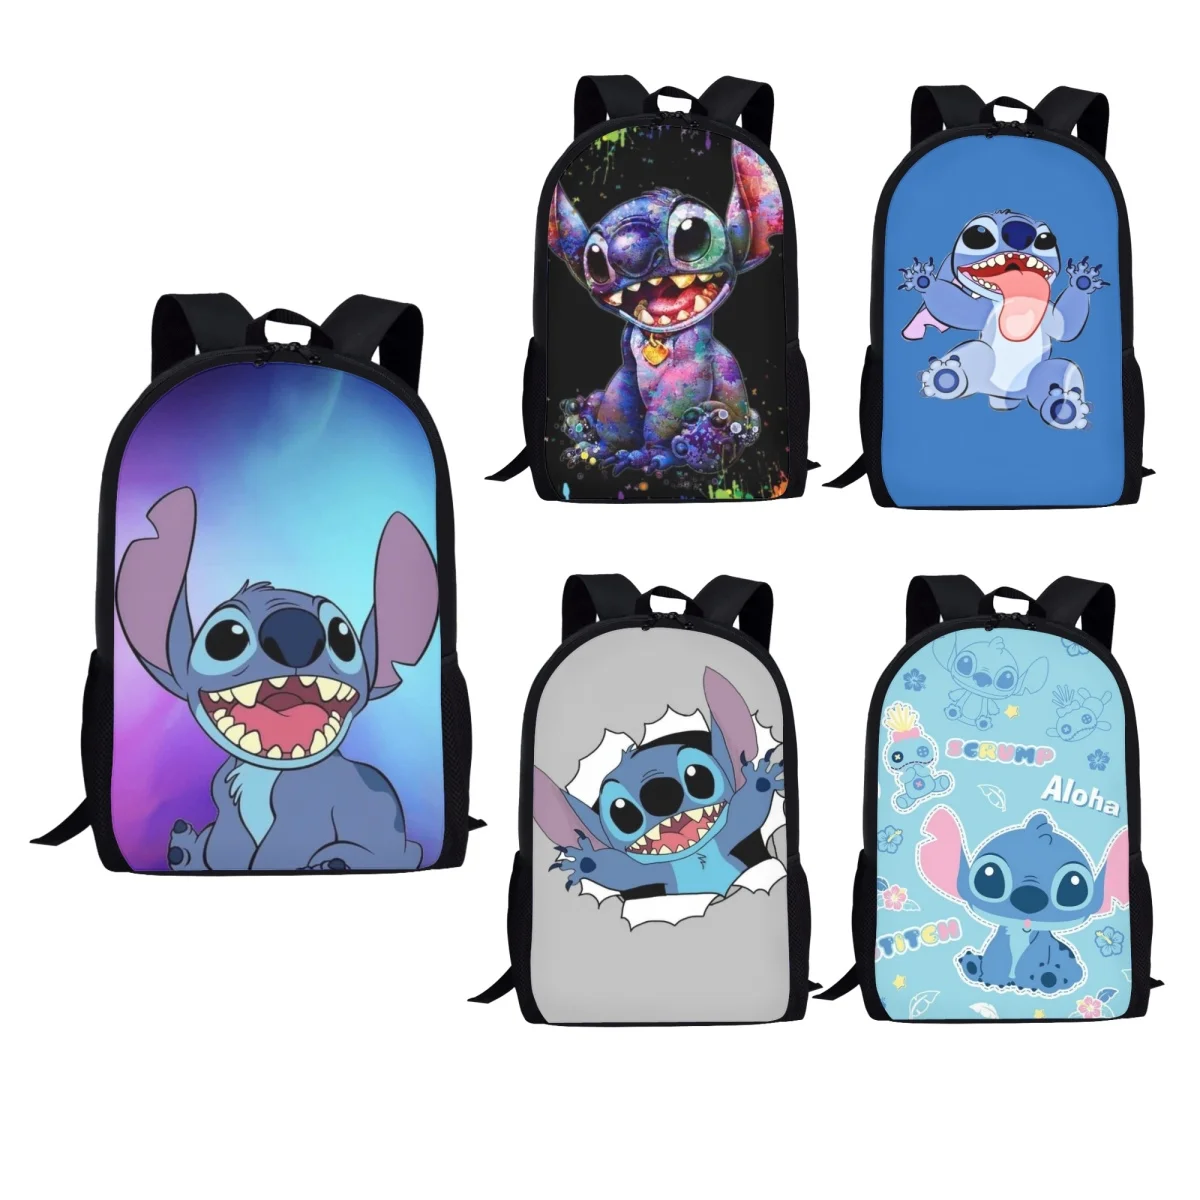 Cute Stitch Cartoon School Bags for Girls Primary Students Pattern Fashion Backpack Book Bag Children Casual Bolsas De Escola